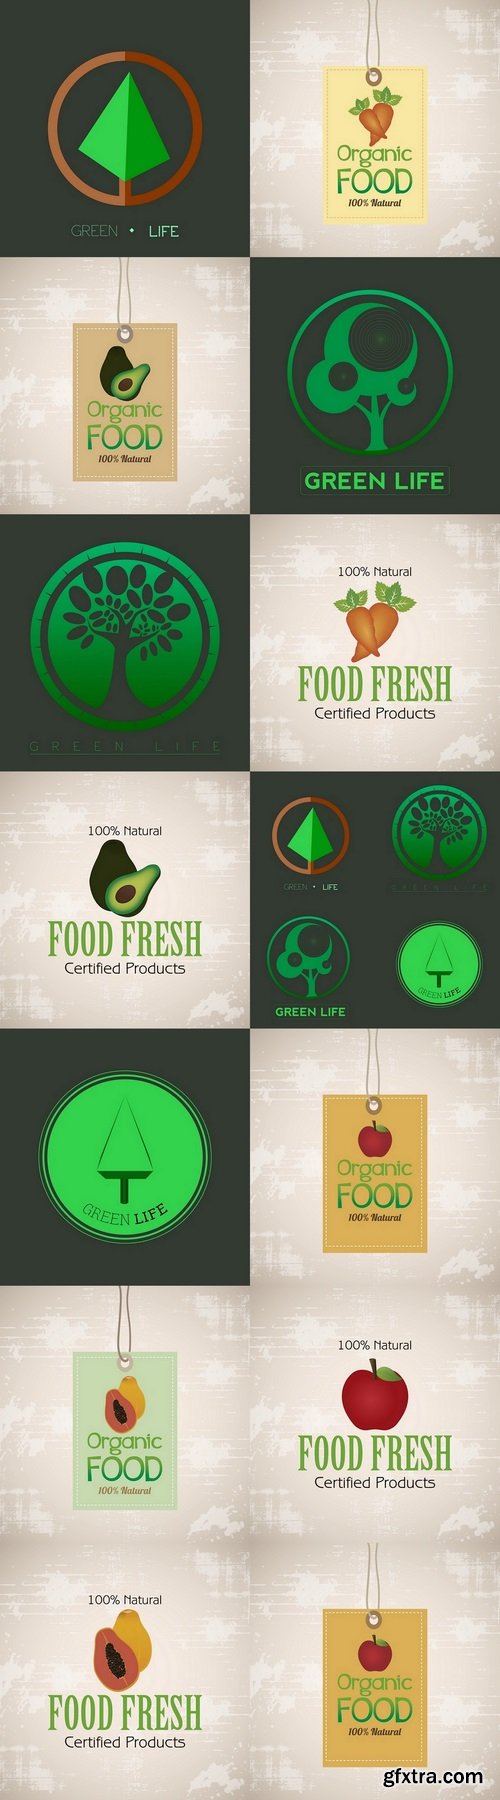 Organic food 5